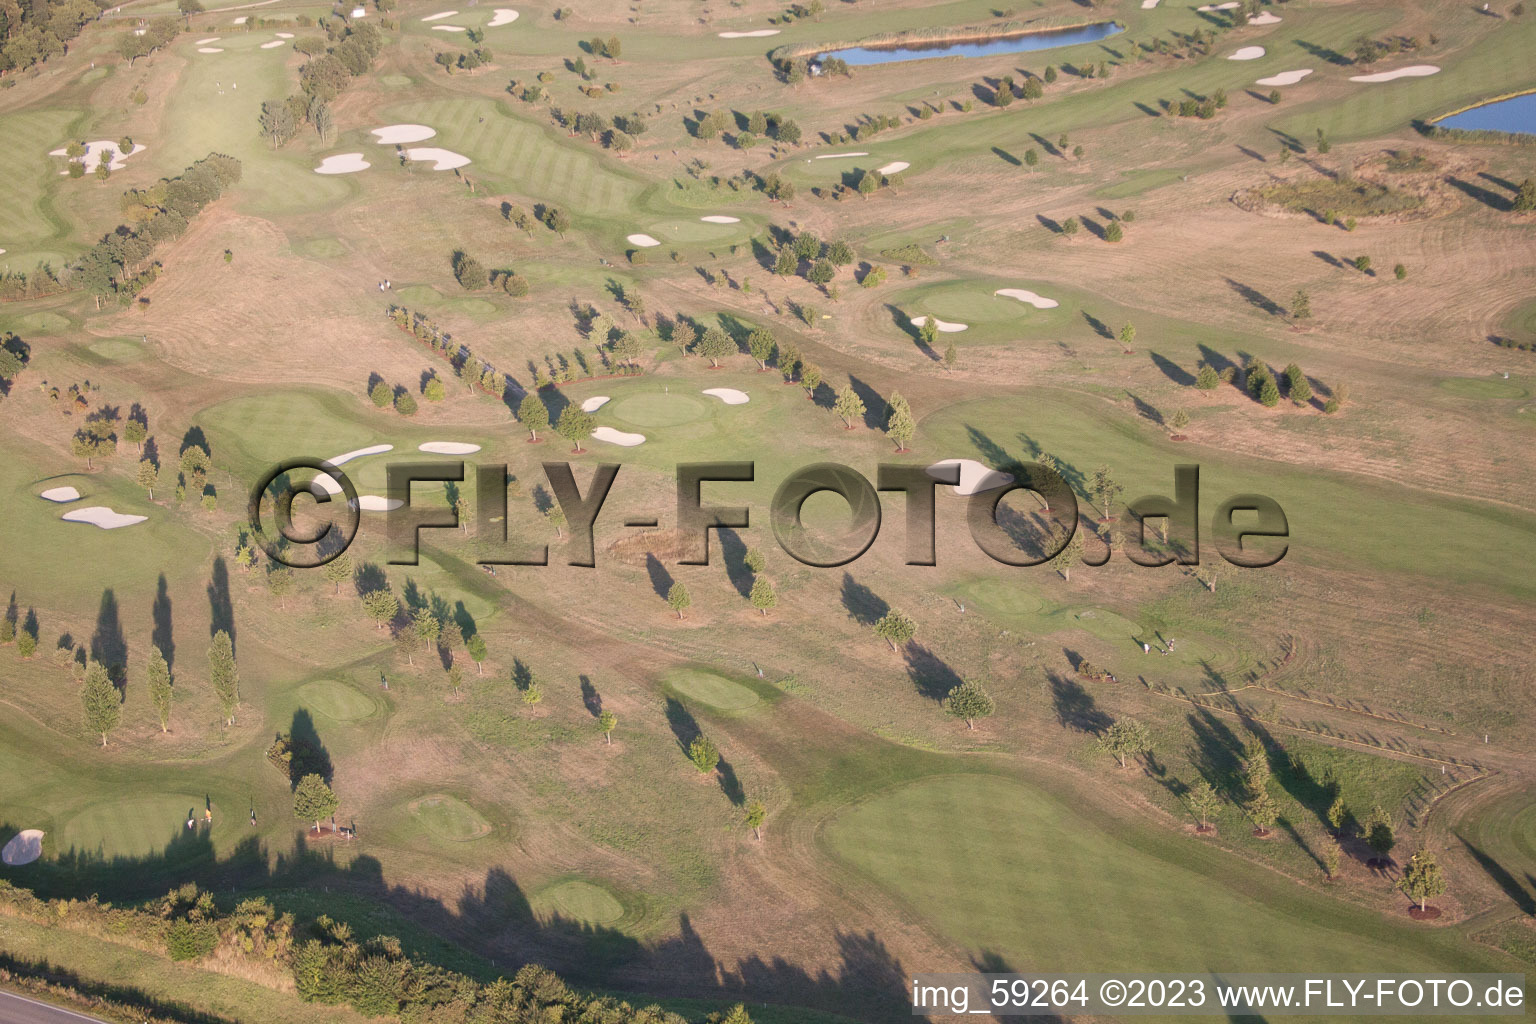 Drone image of Golf club Urloffen in the district Urloffen in Appenweier in the state Baden-Wuerttemberg, Germany